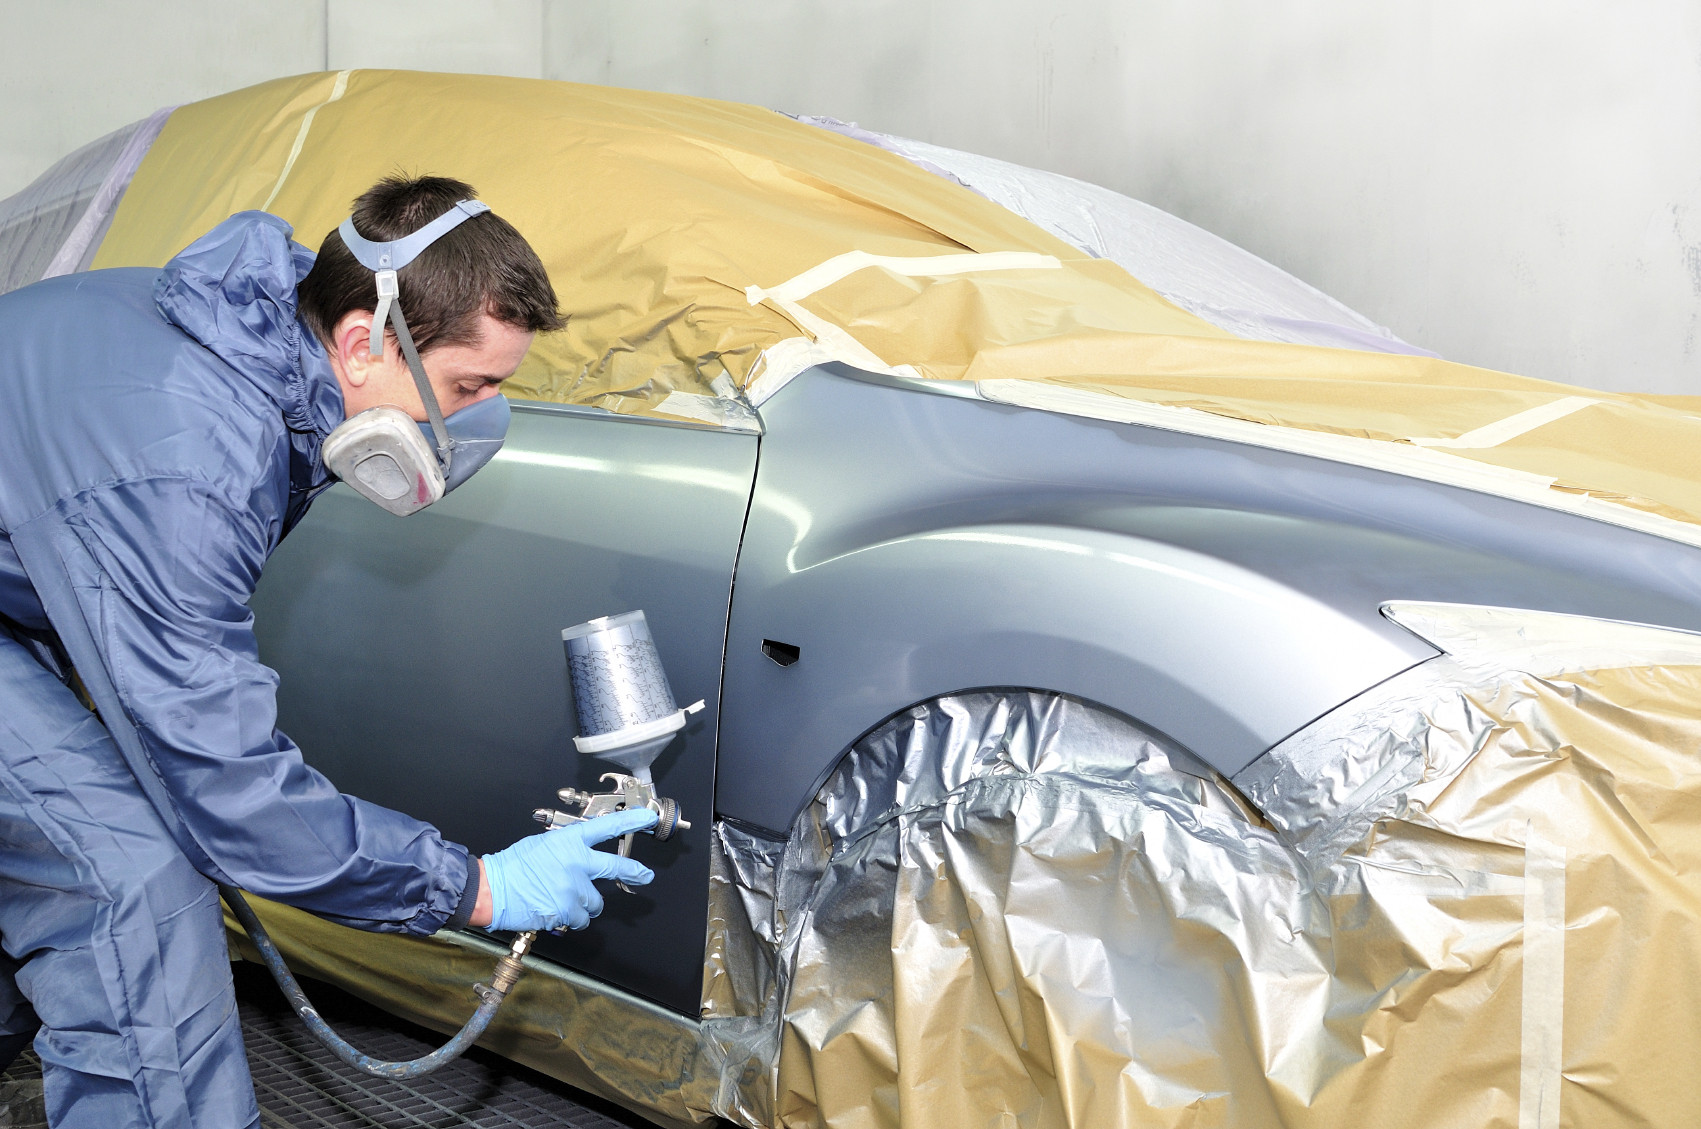 Best ideas about DIY Auto Paint
. Save or Pin Car Paint Job Tempe Arizona – DIY Auto Paint Tips Now.